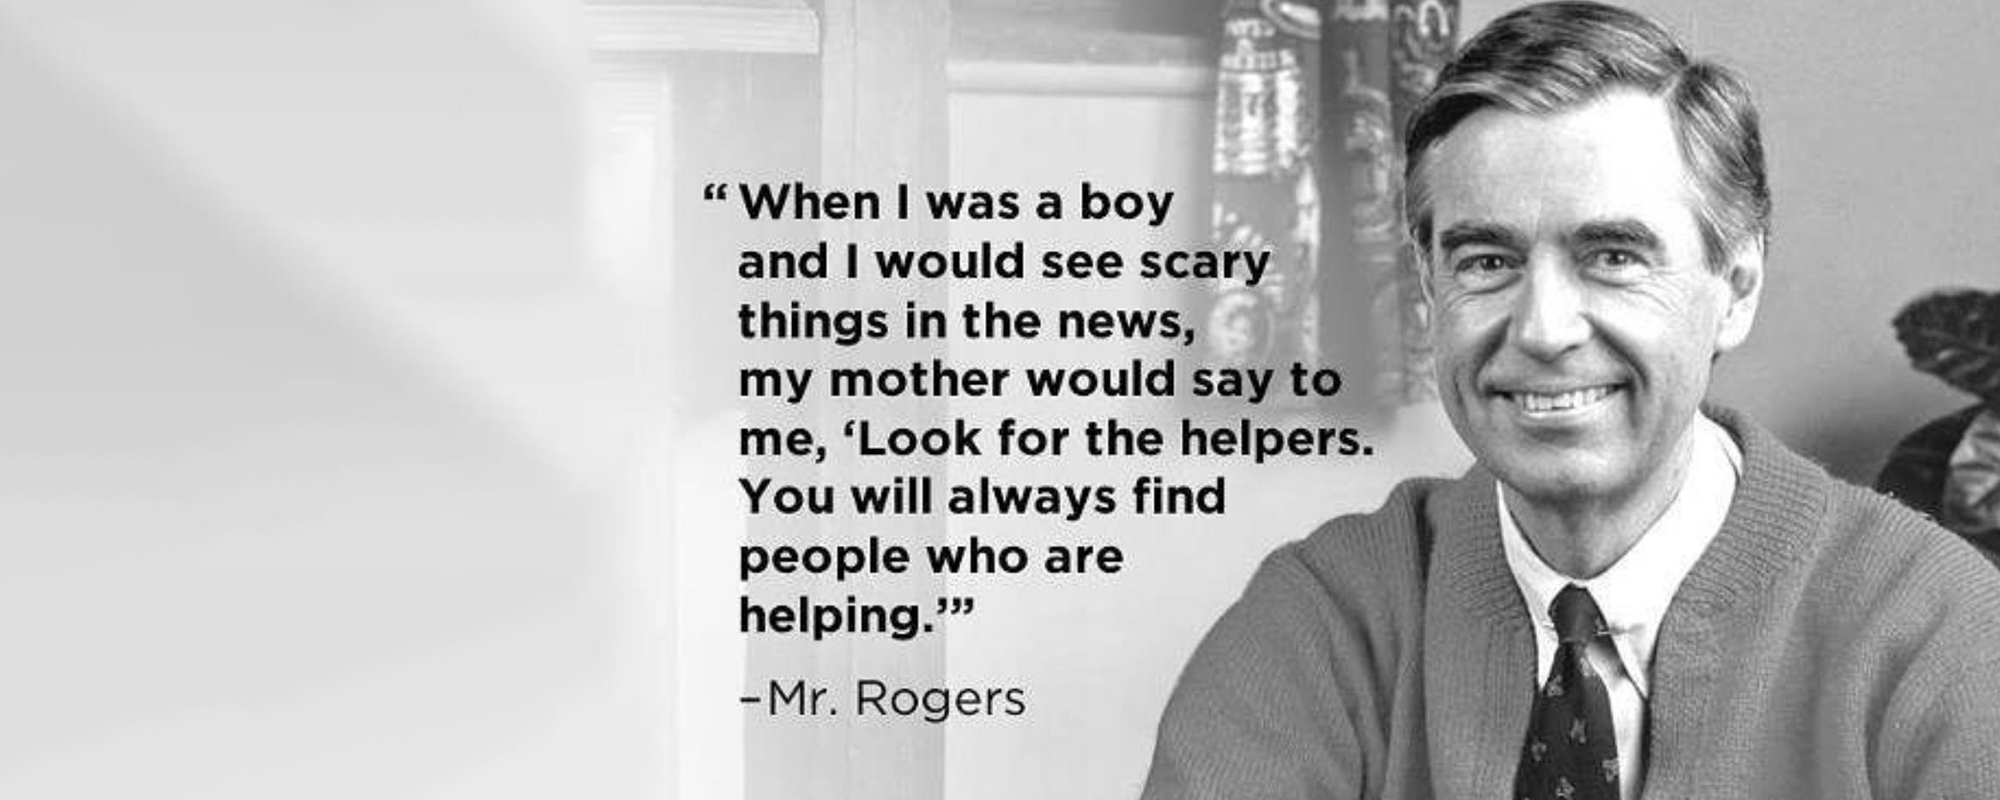 Children Mr Rogers, leader, enlightened, kind, teacher, parent, 